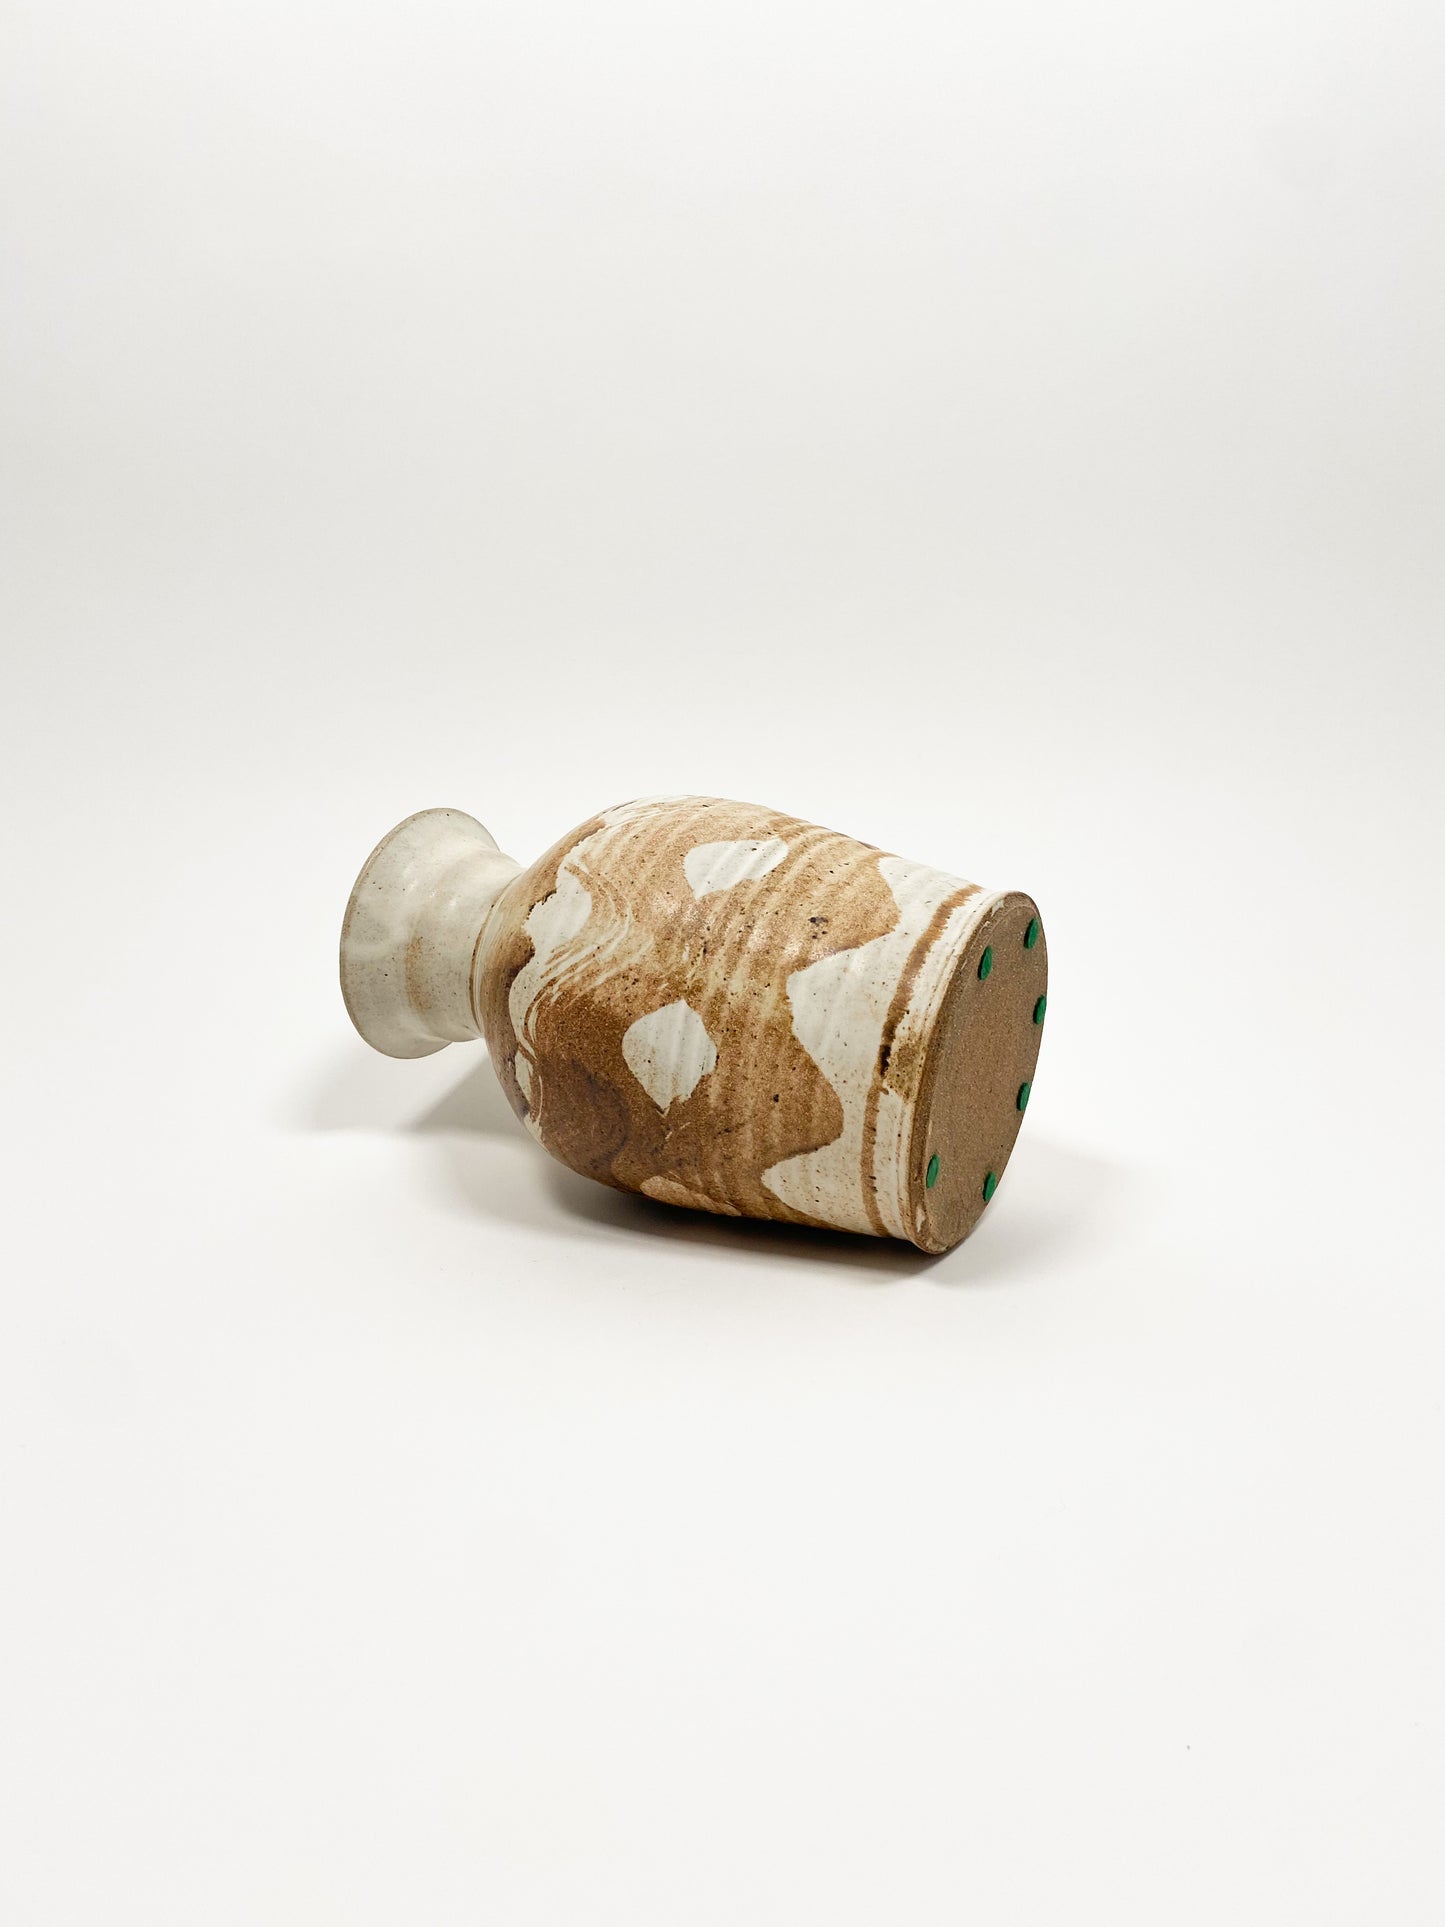 Handmade Wavy Ceramic Vessel